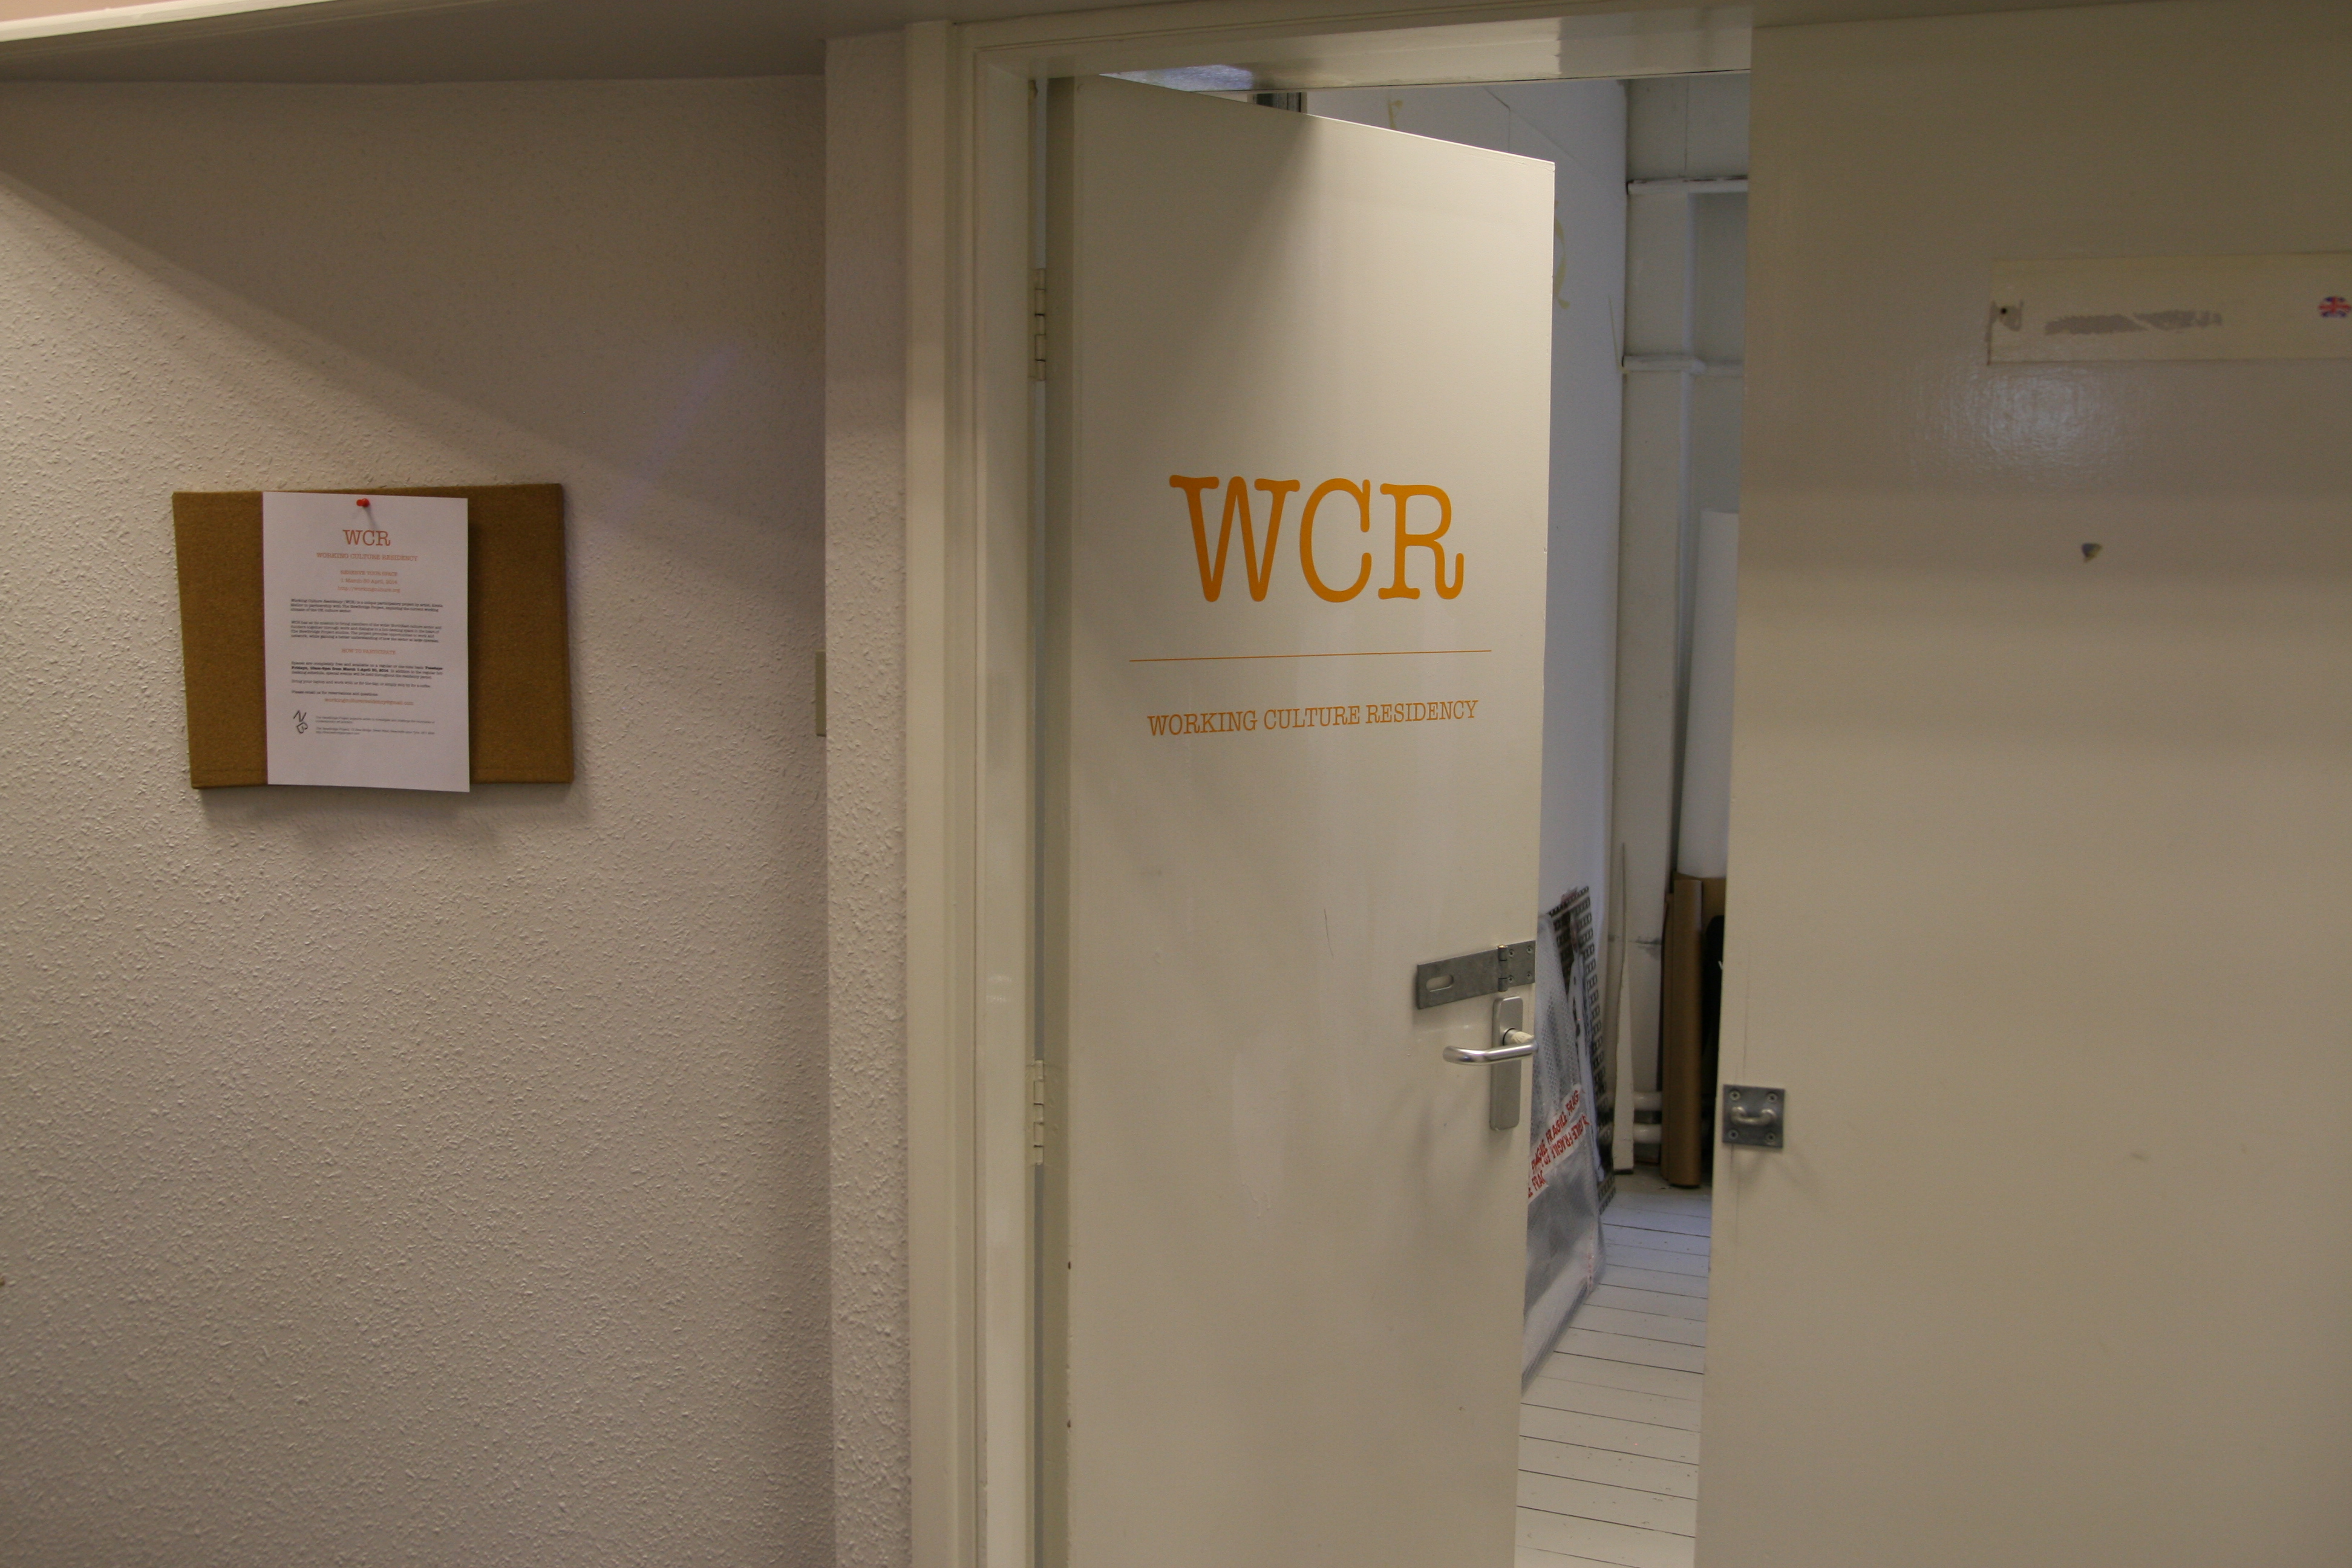 Working Culture Residency Project – Our Door is Open!